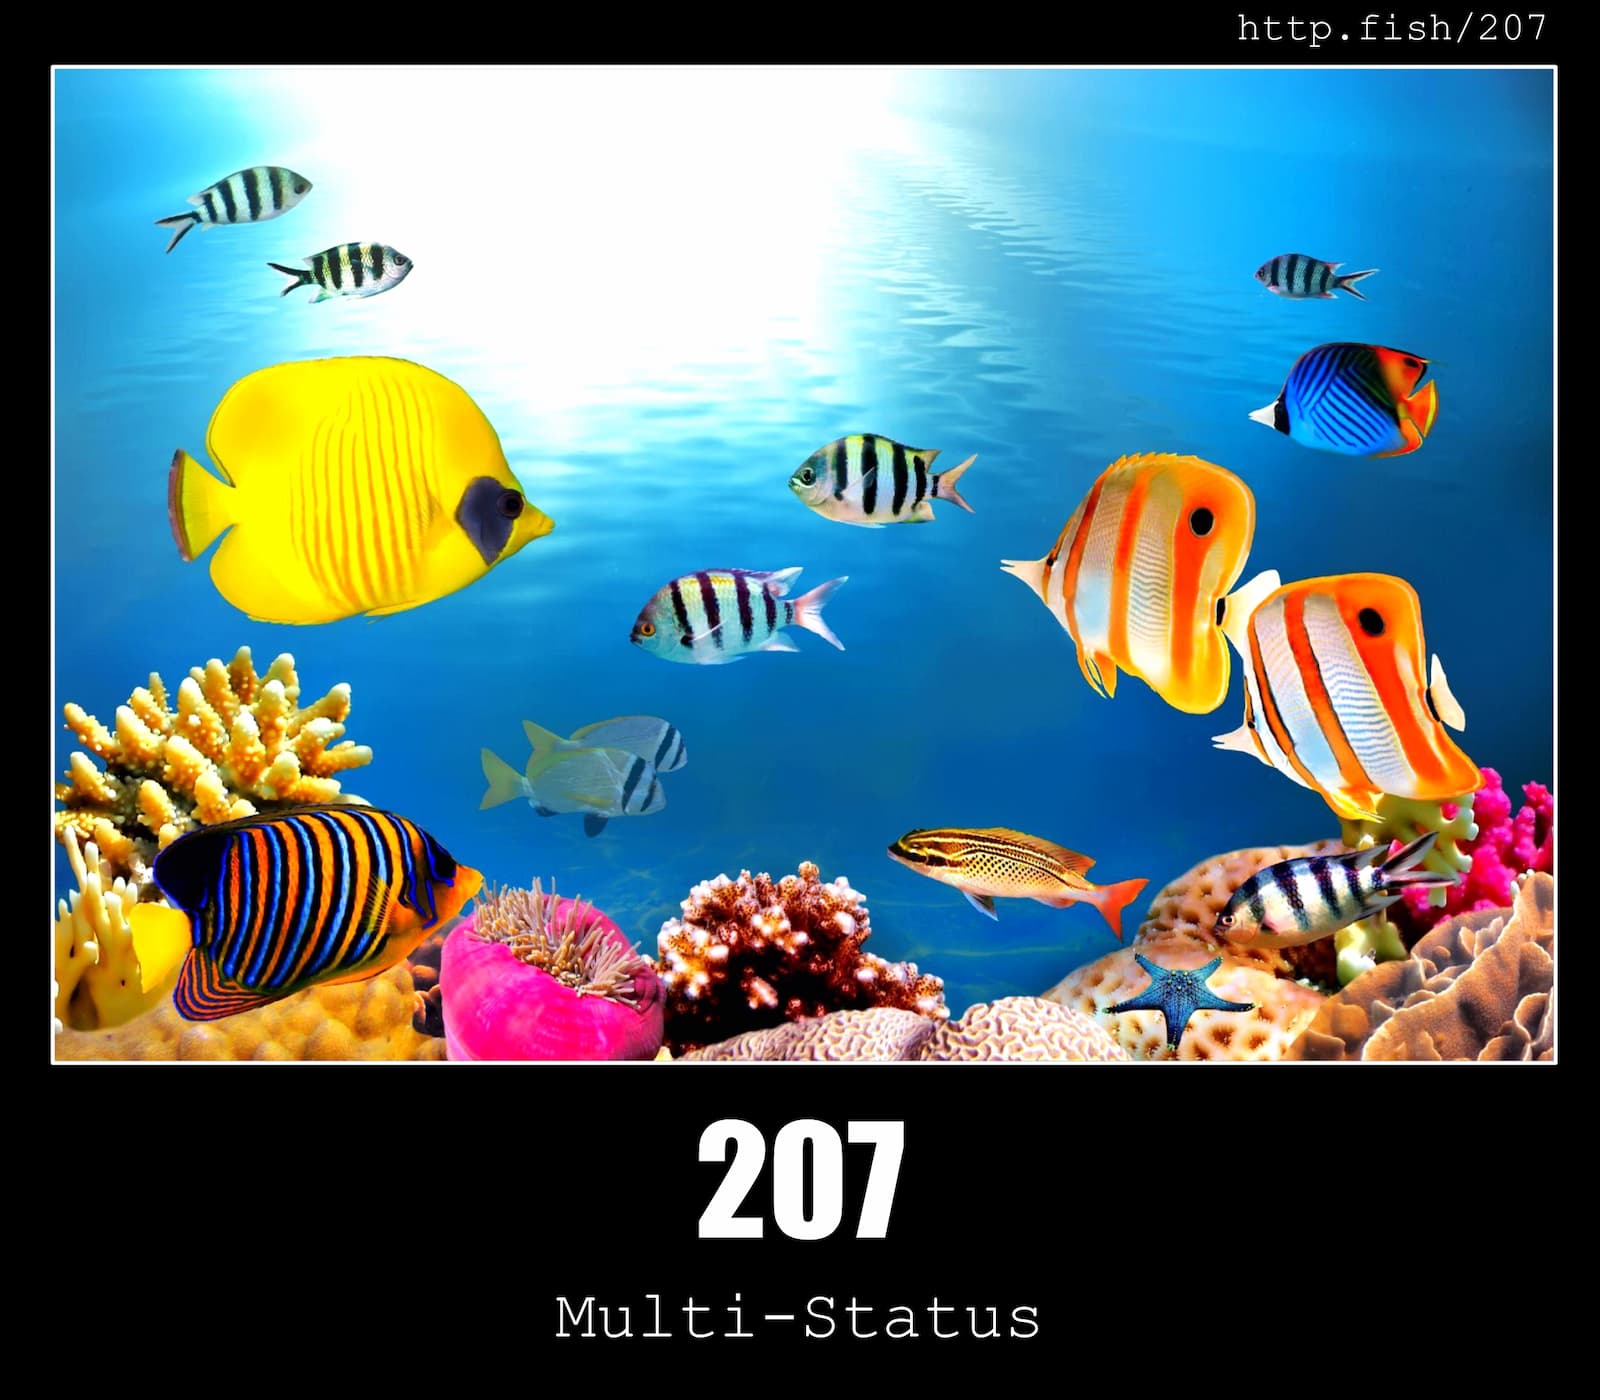 HTTP Status Code 207 Multi-Status & Fish